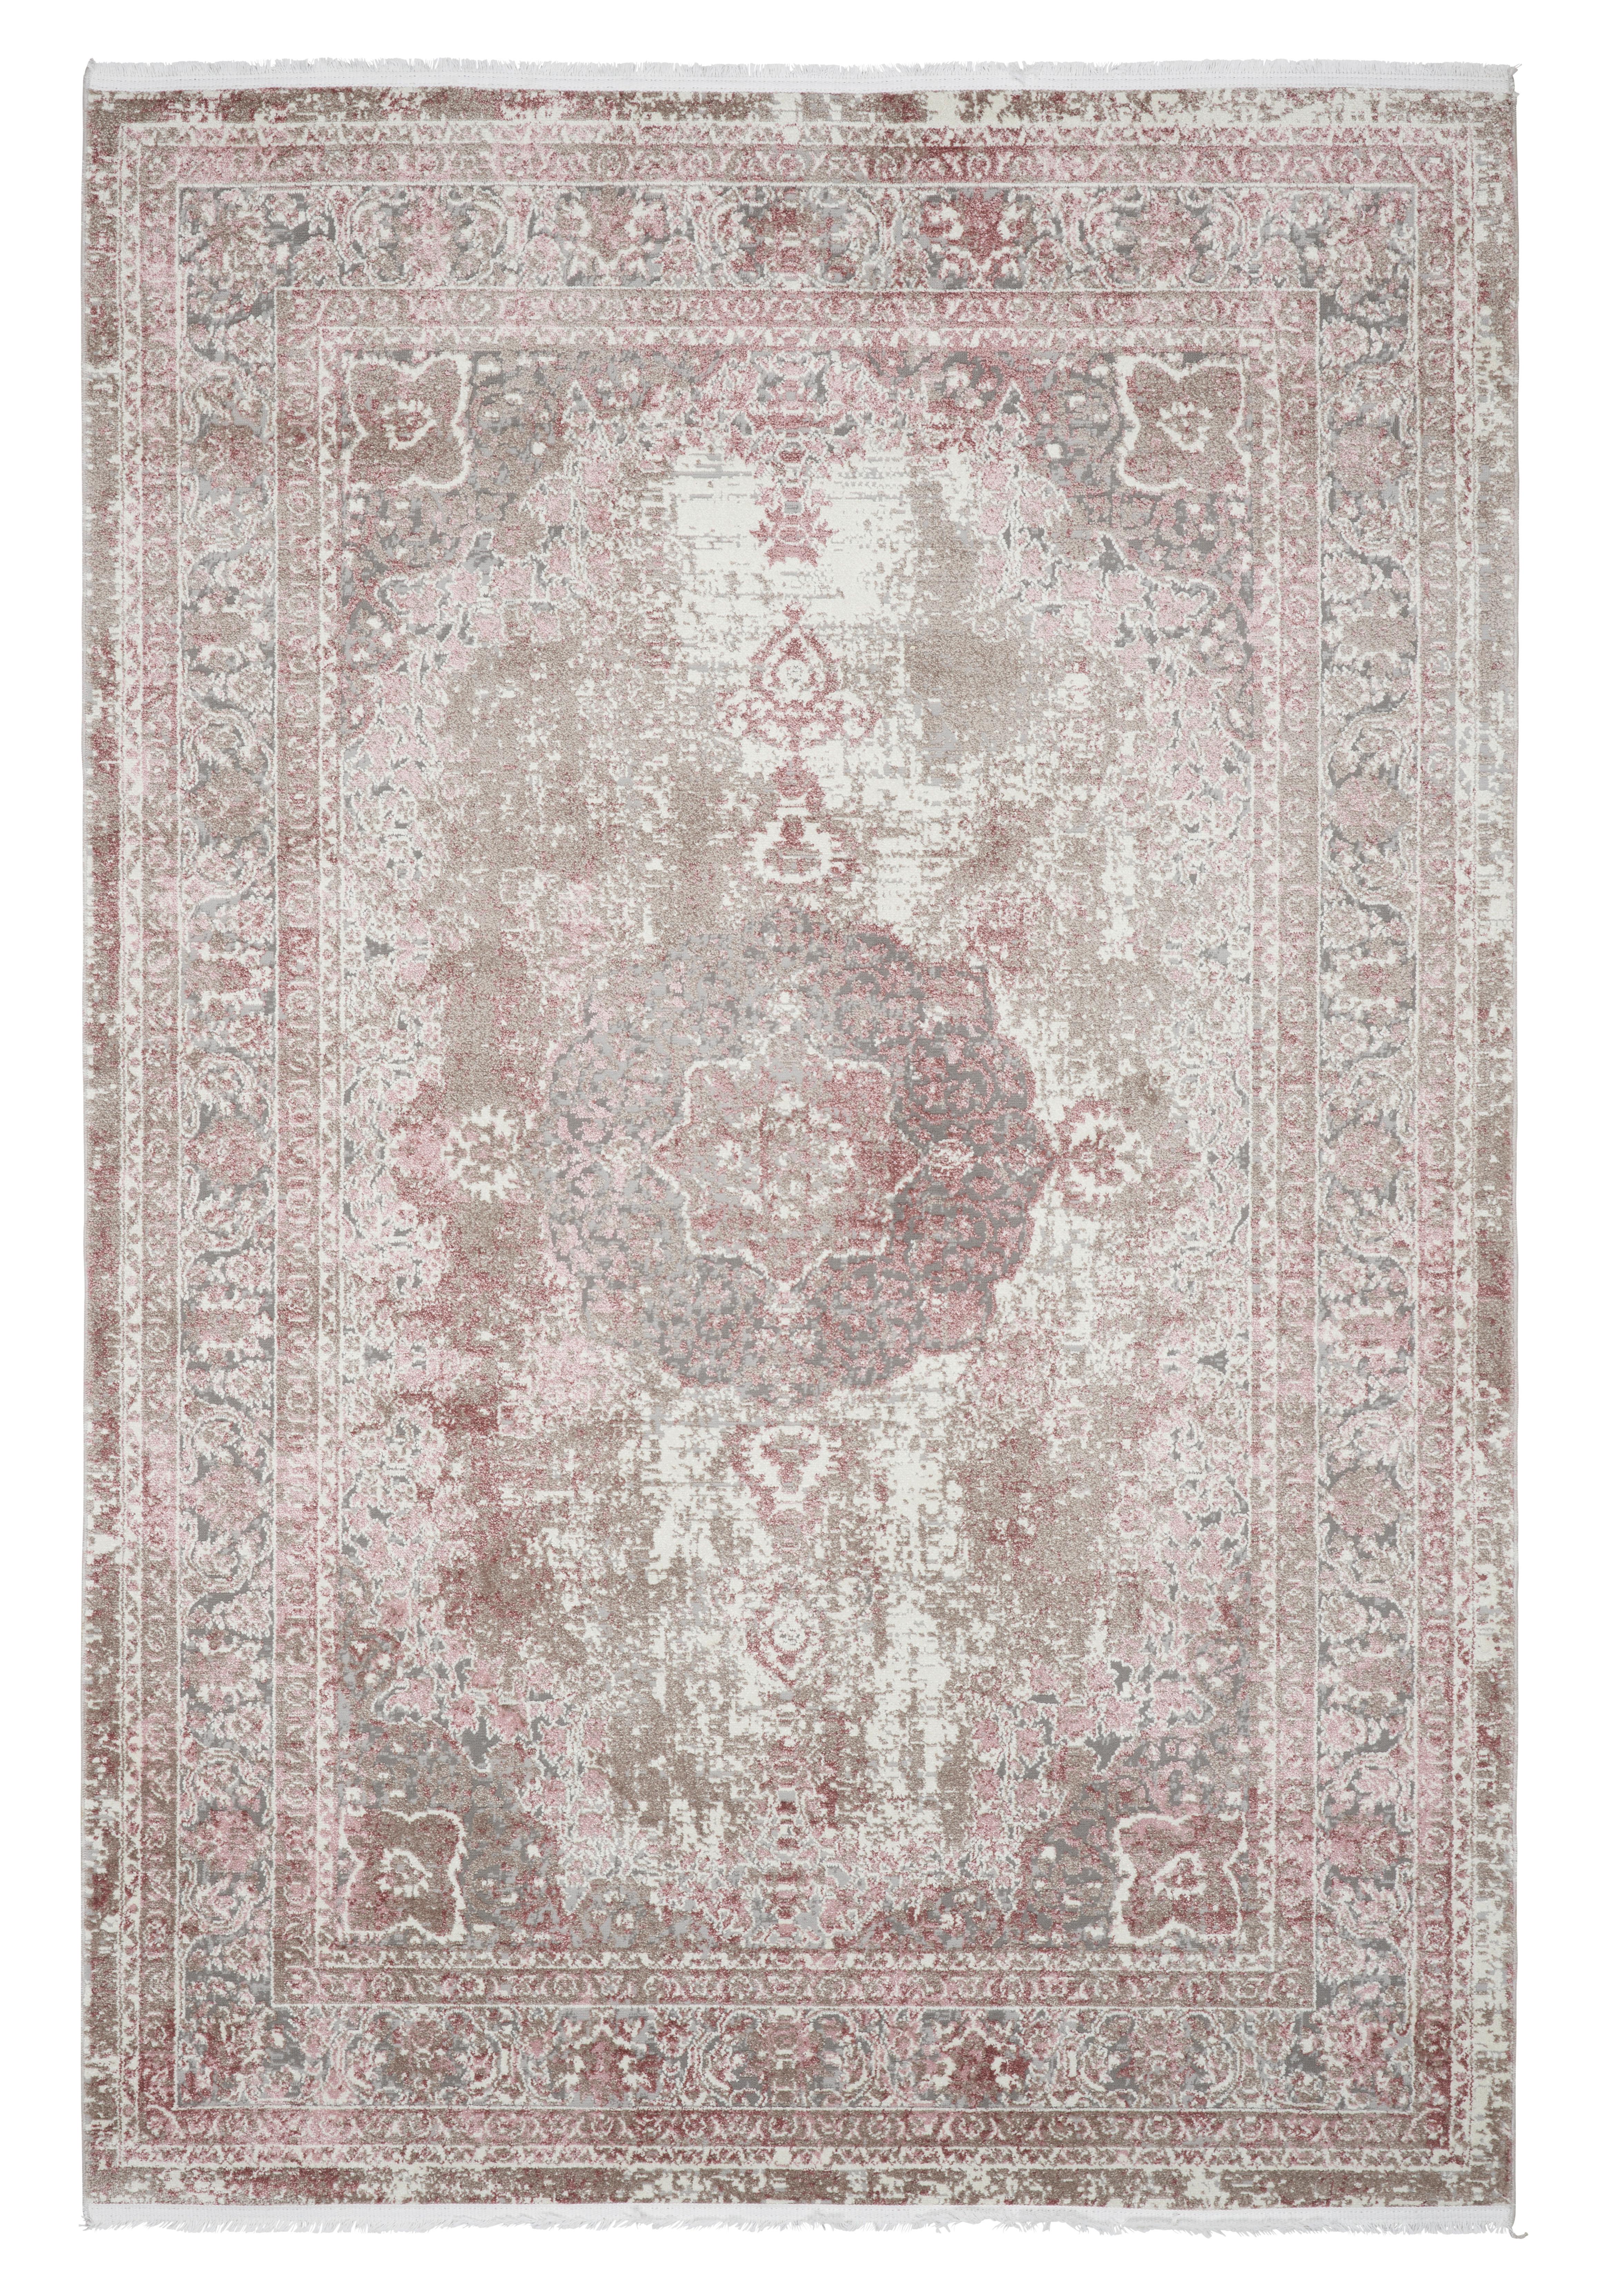 Tkaný Koberec Marcus 3, 160/230cm, Ružová - ružová, textil (160/230cm) - Modern Living